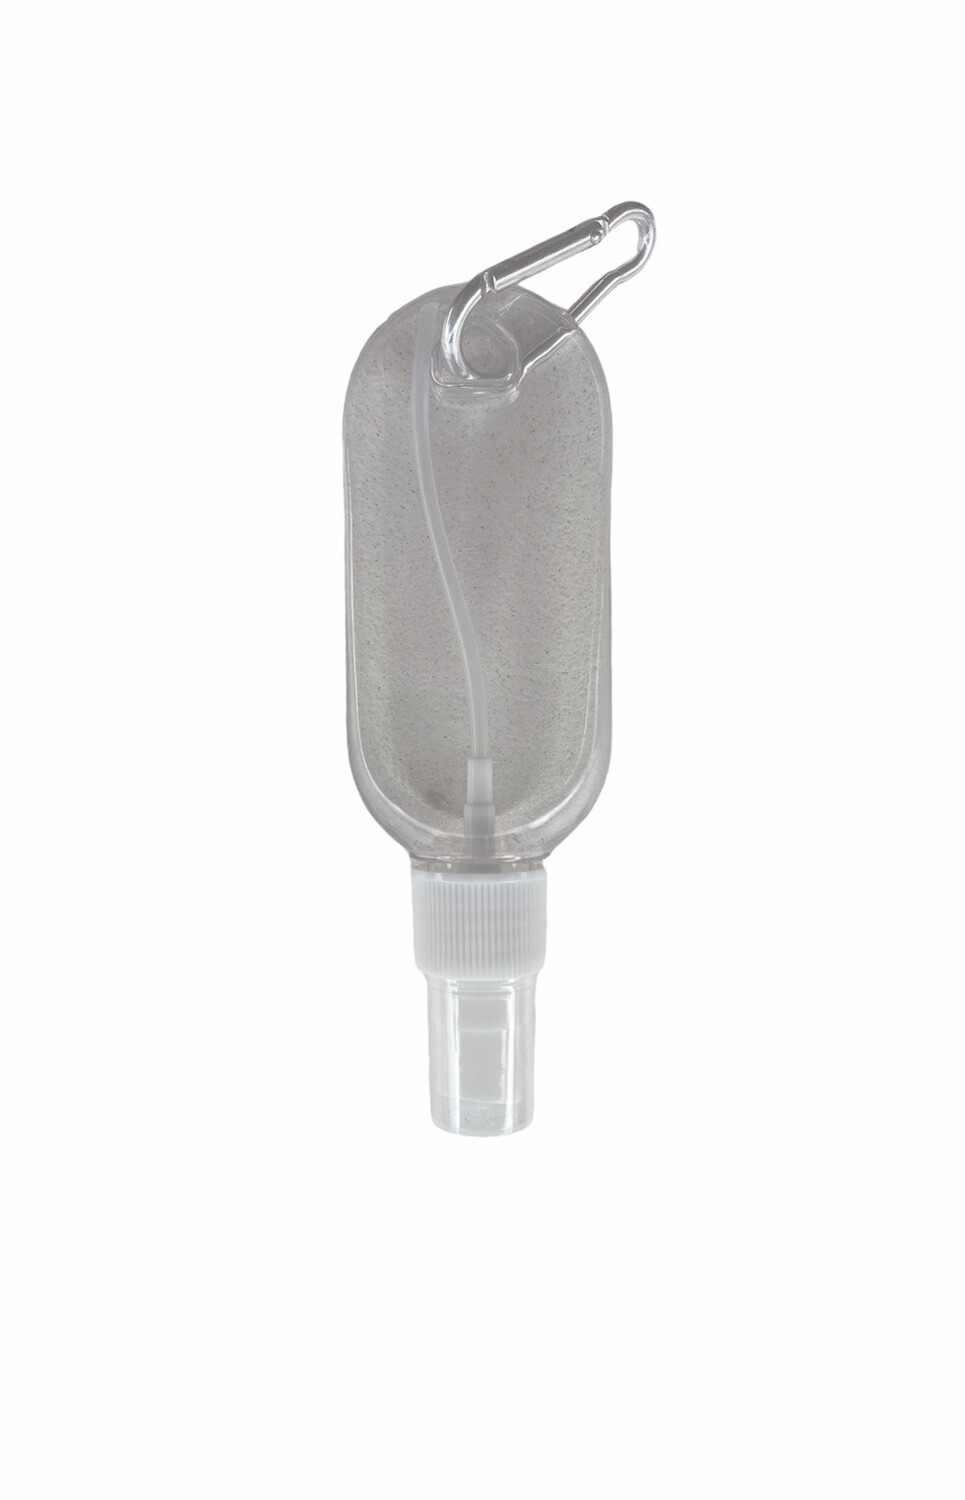 60ml, Pet Sanitizer Bottle With Key Chain - Spray Cap